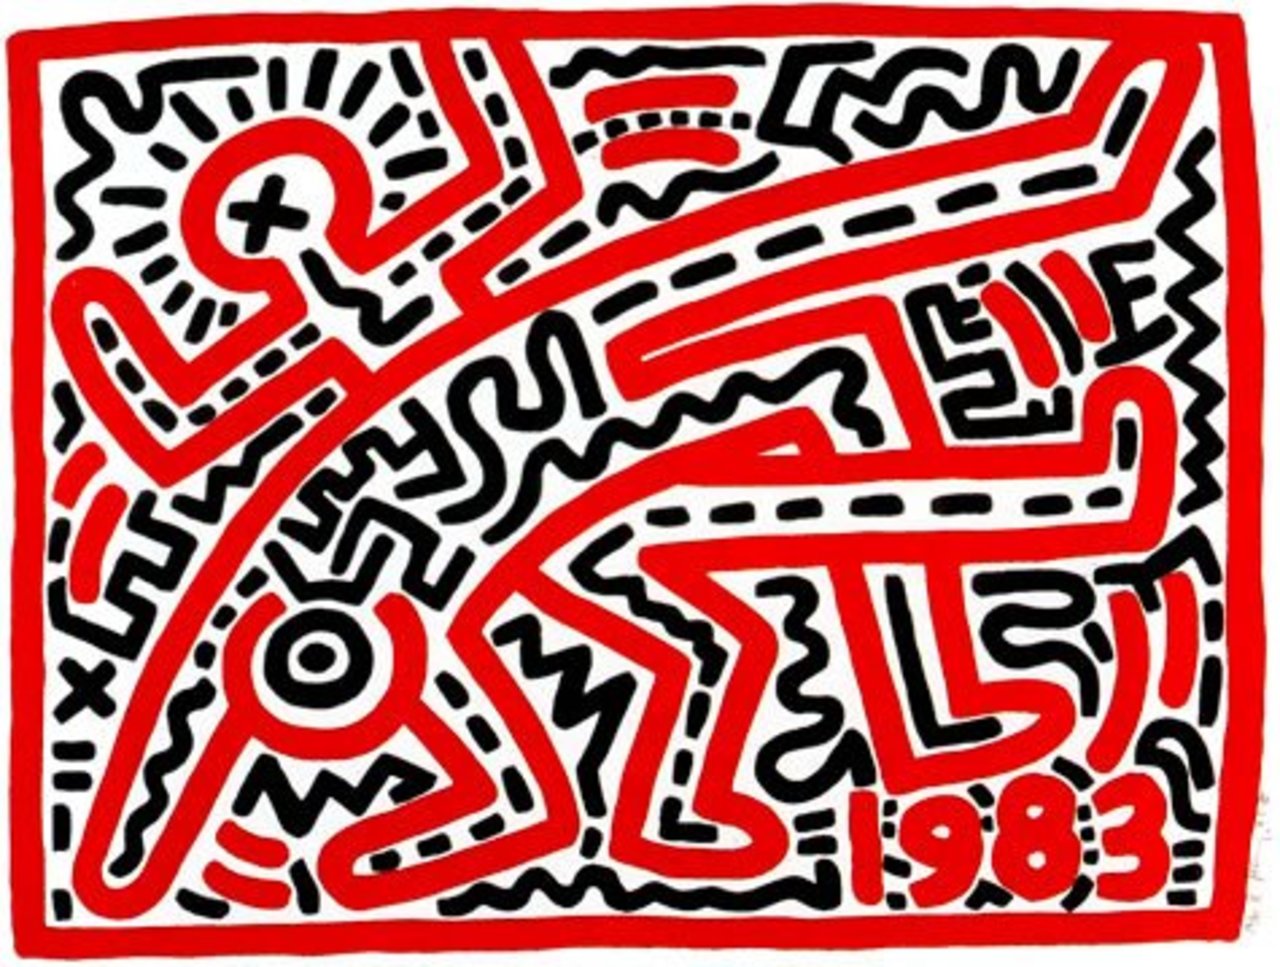 Keith Haring
#graffiti #painting #streetart #artmuse #گرافیتی https://t.co/HUFB2rqYaf